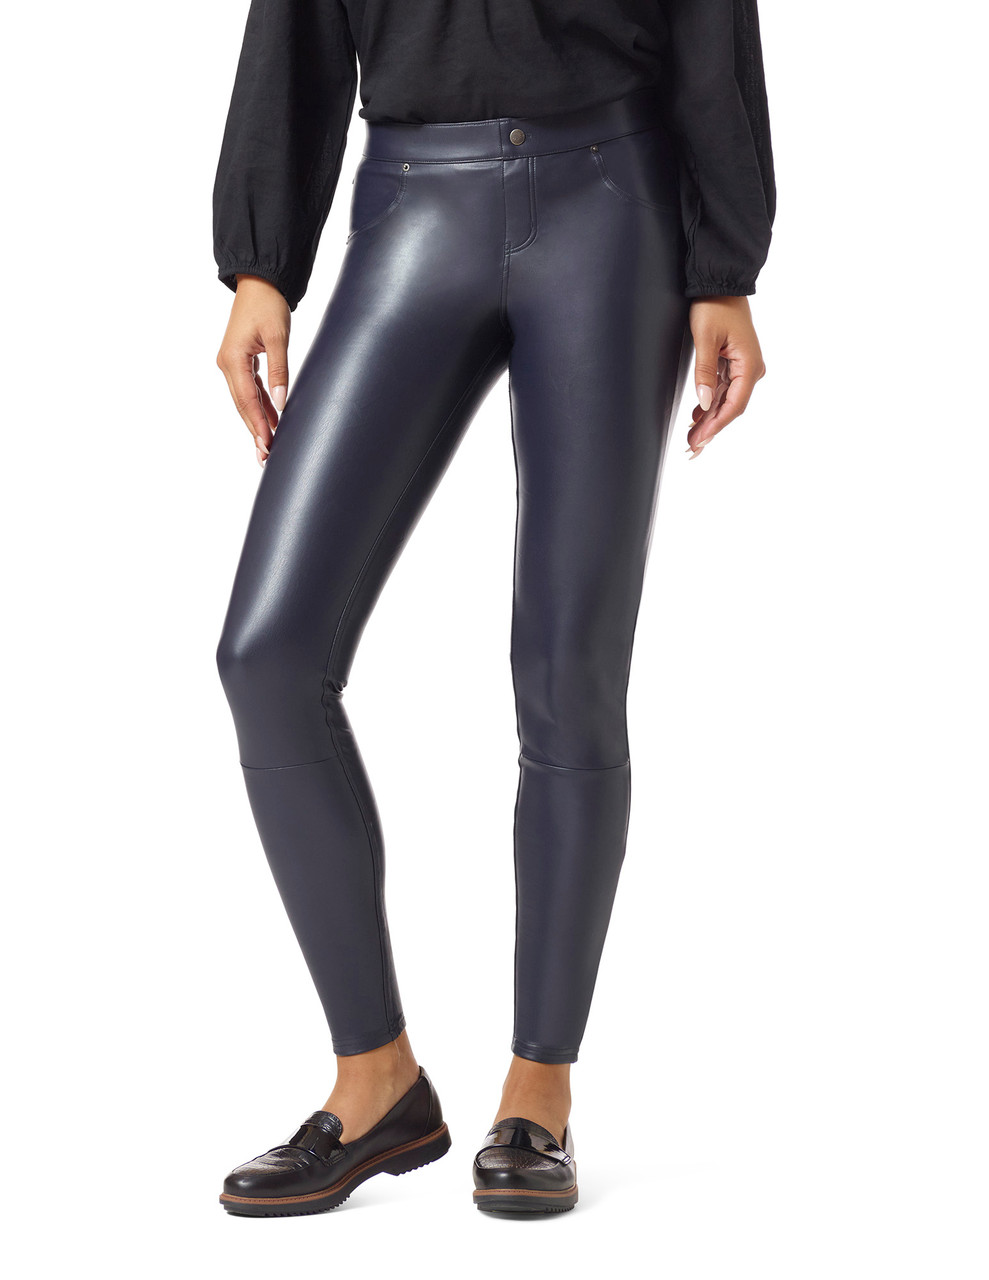 Hue leatherette leggings size xs  Leatherette, Leggings, Leather pants